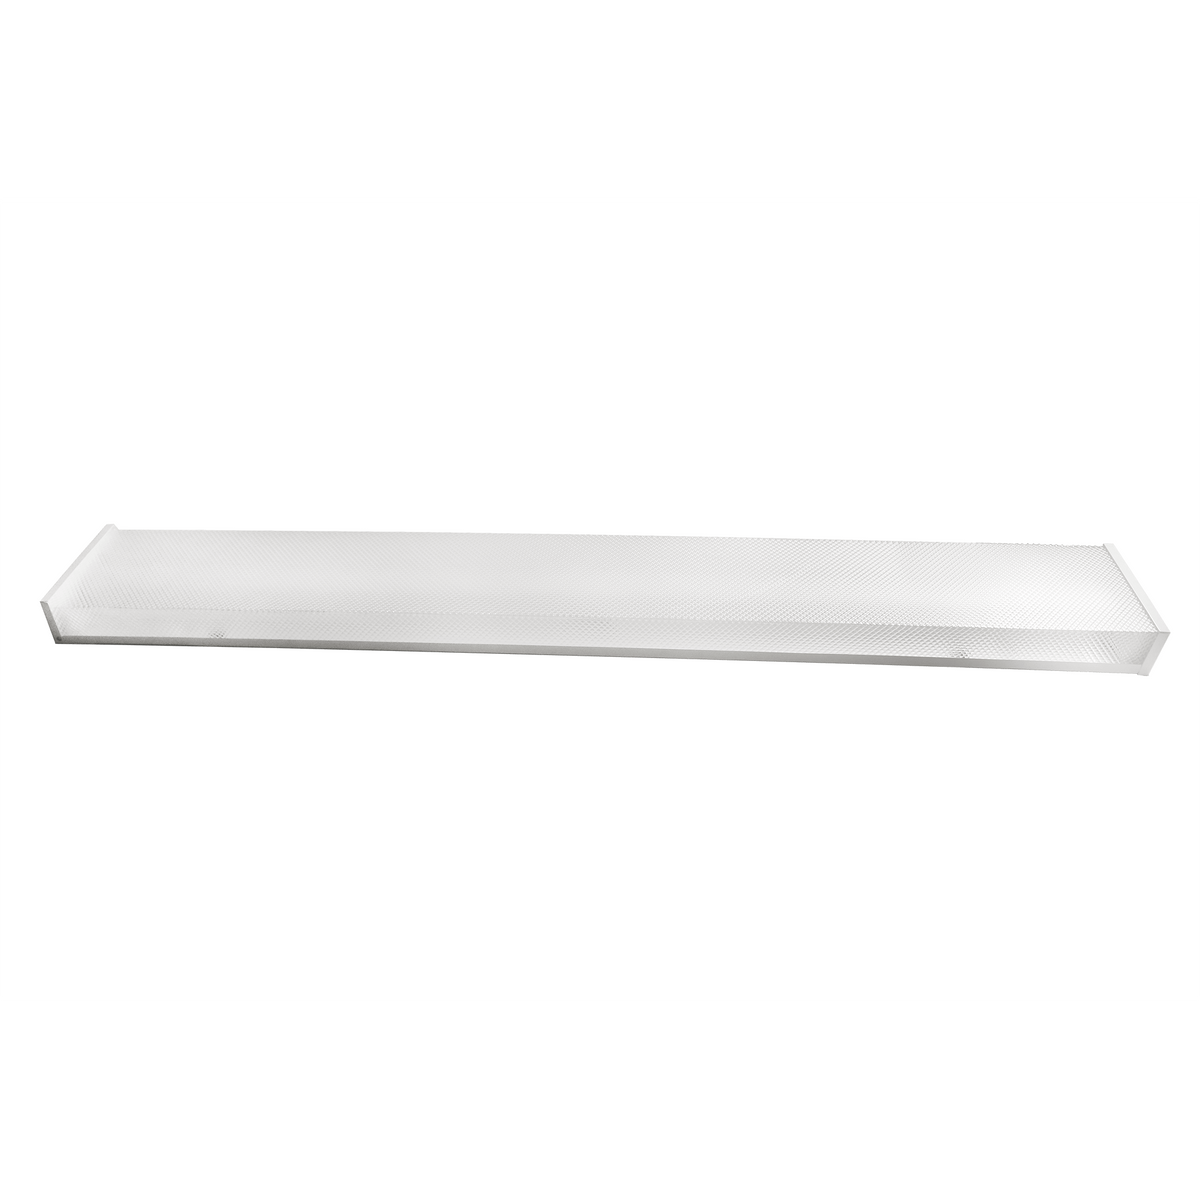 48 inch under cabinet led light bar for home - Vivio Lighting